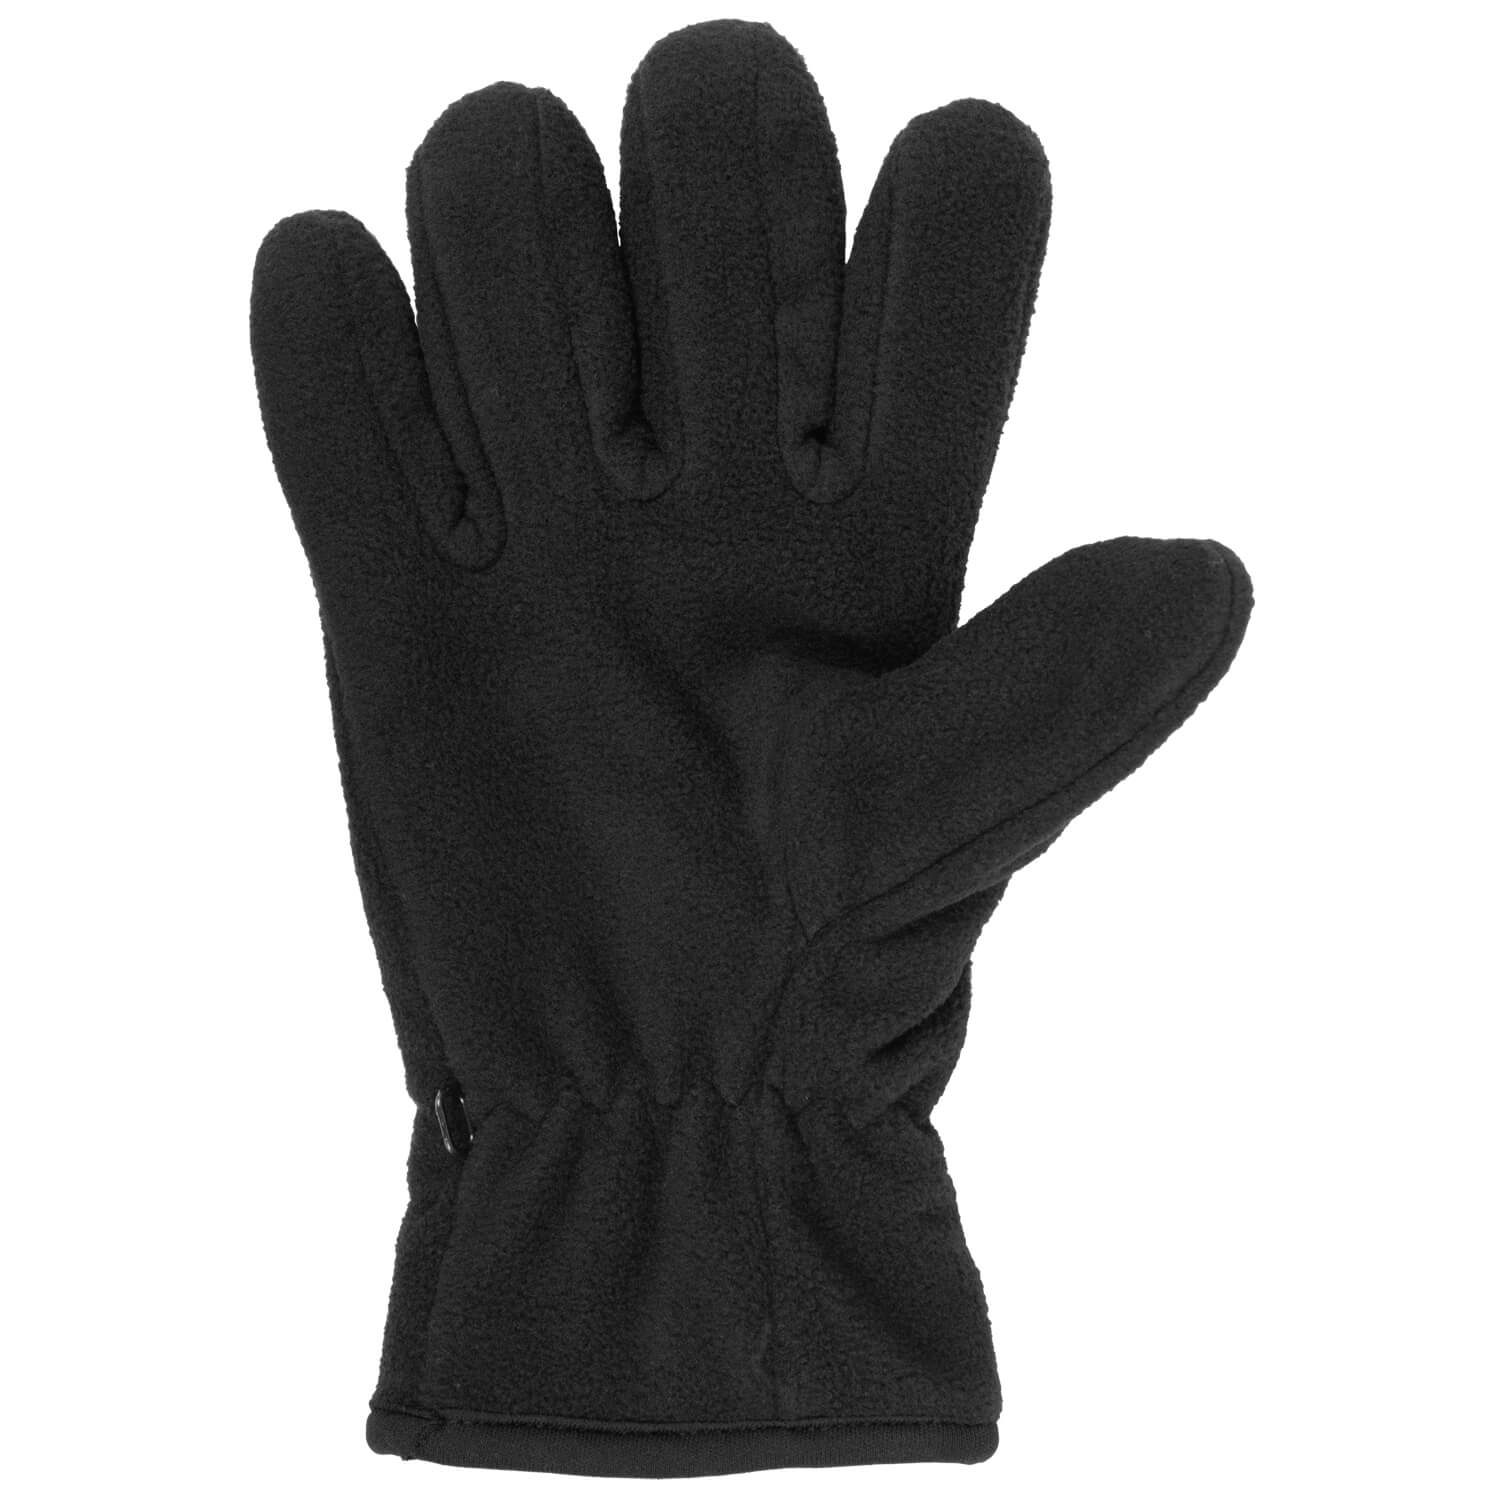 Bild 3: Fleece Gloves